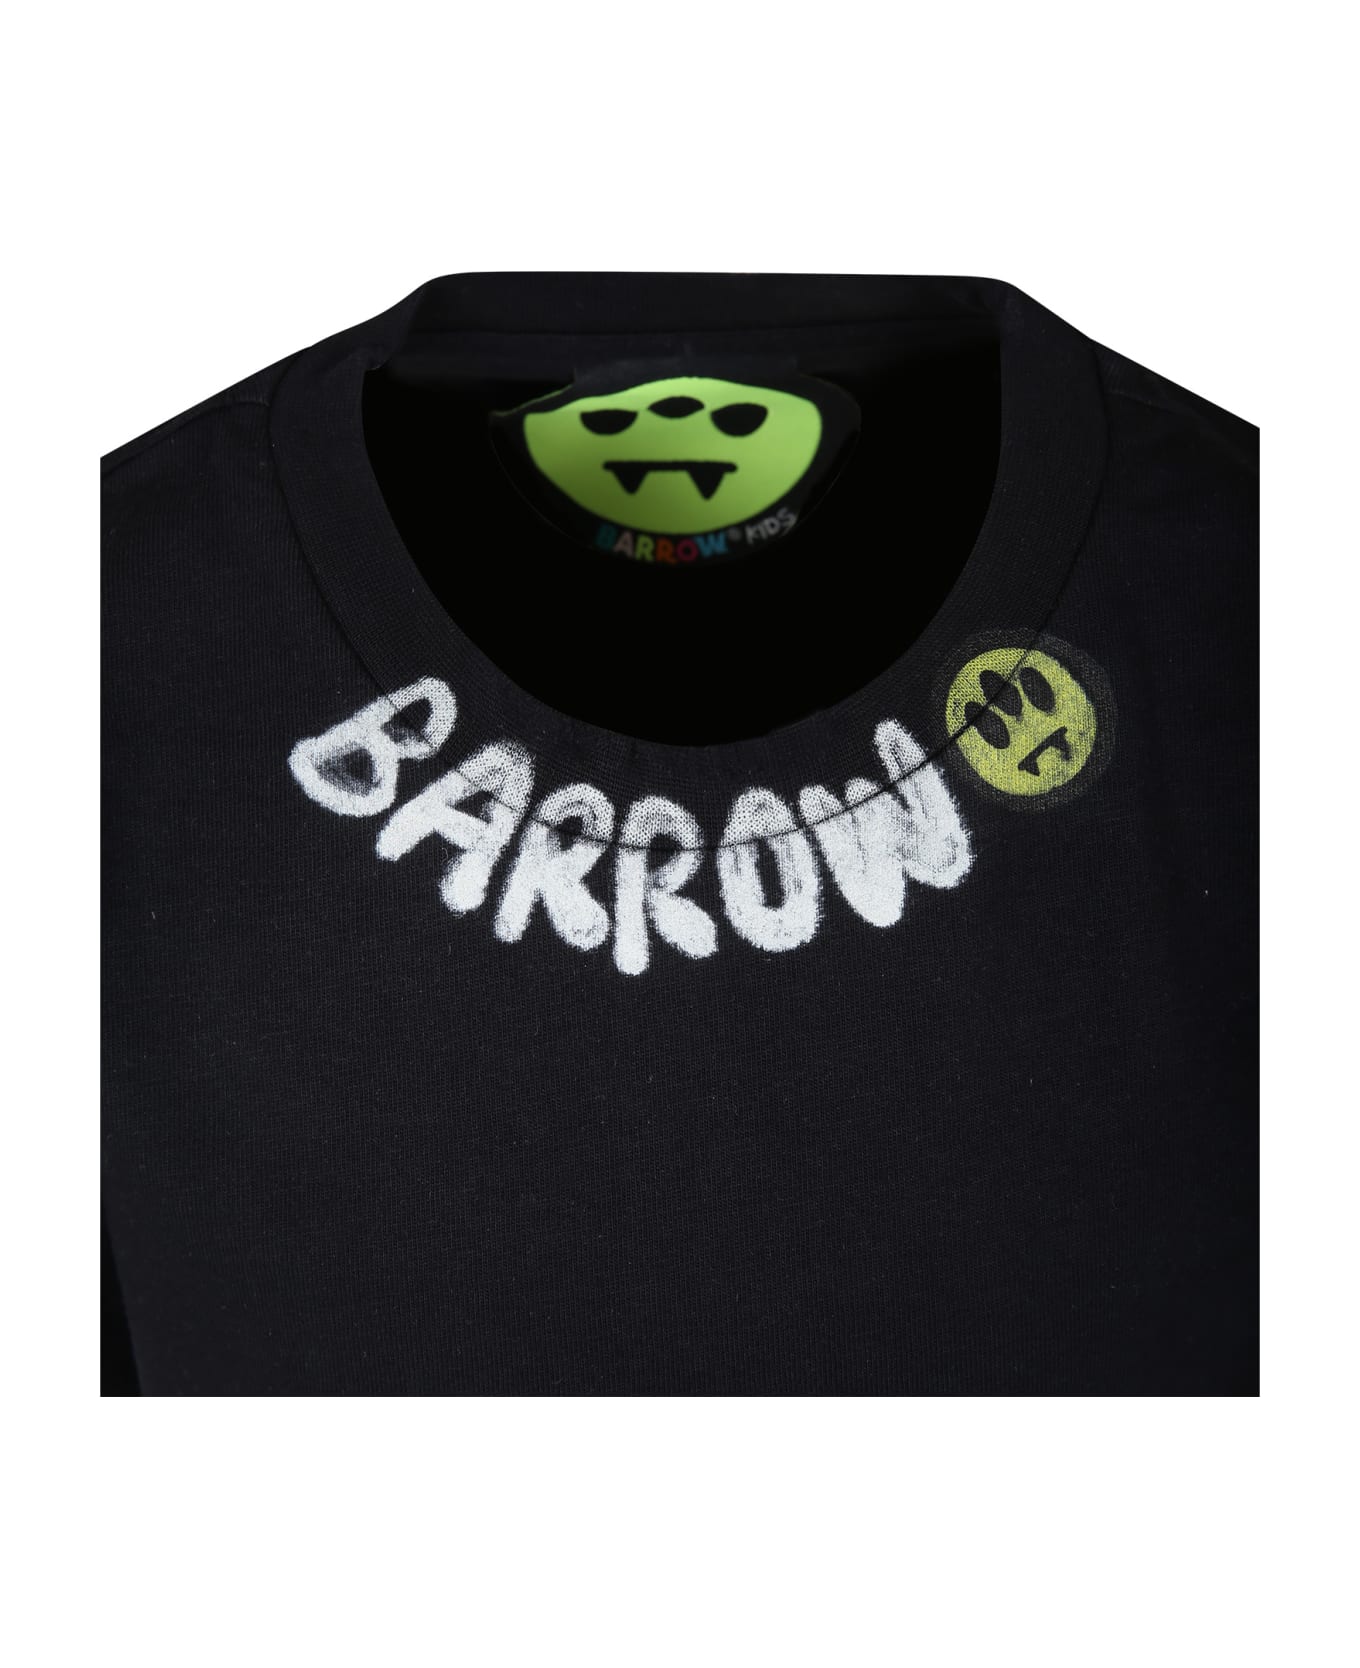 Barrow Black T-shirt For Girl With E Smile Logo - Black